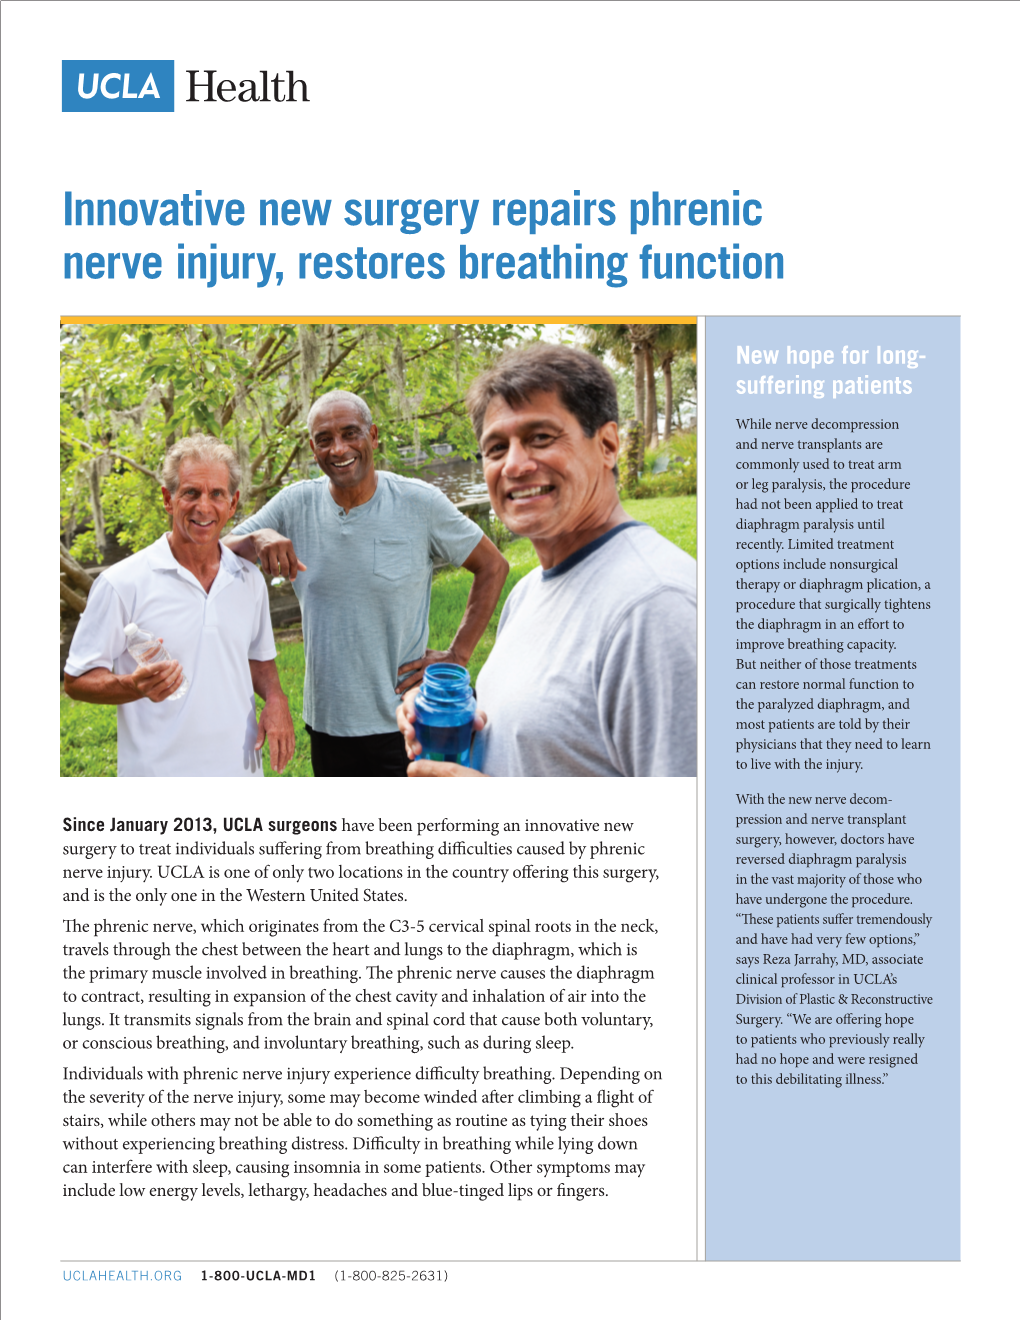 Innovative New Surgery Repairs Phrenic Nerve Injury, Restores Breathing Function